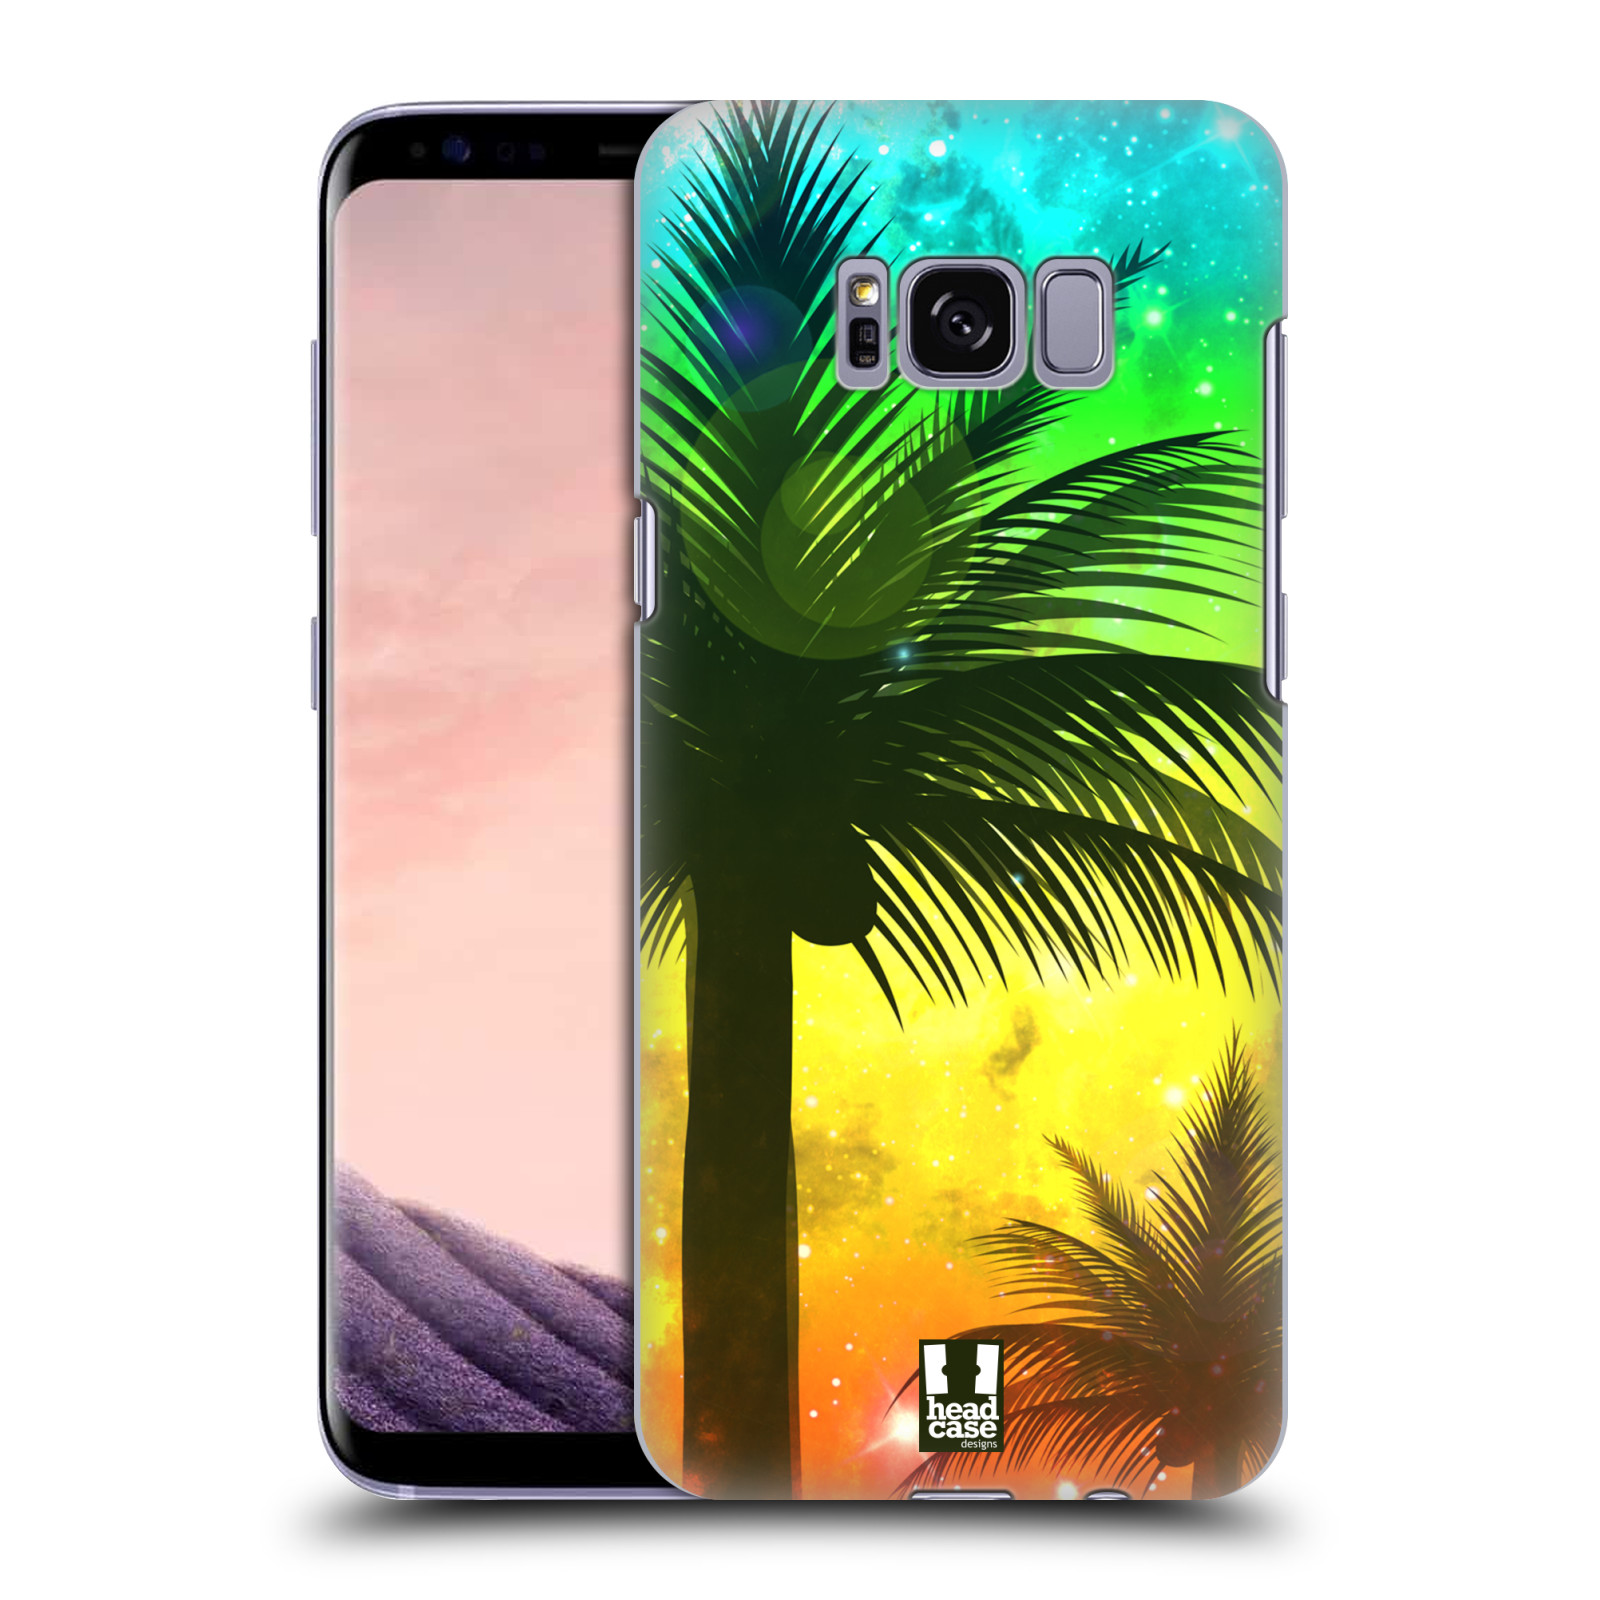 HEAD CASE plastový obal na mobil Samsung Galaxy S8 vzor Kreslený motiv silueta moře a palmy ZELENÁ A ORANŽOVÁ